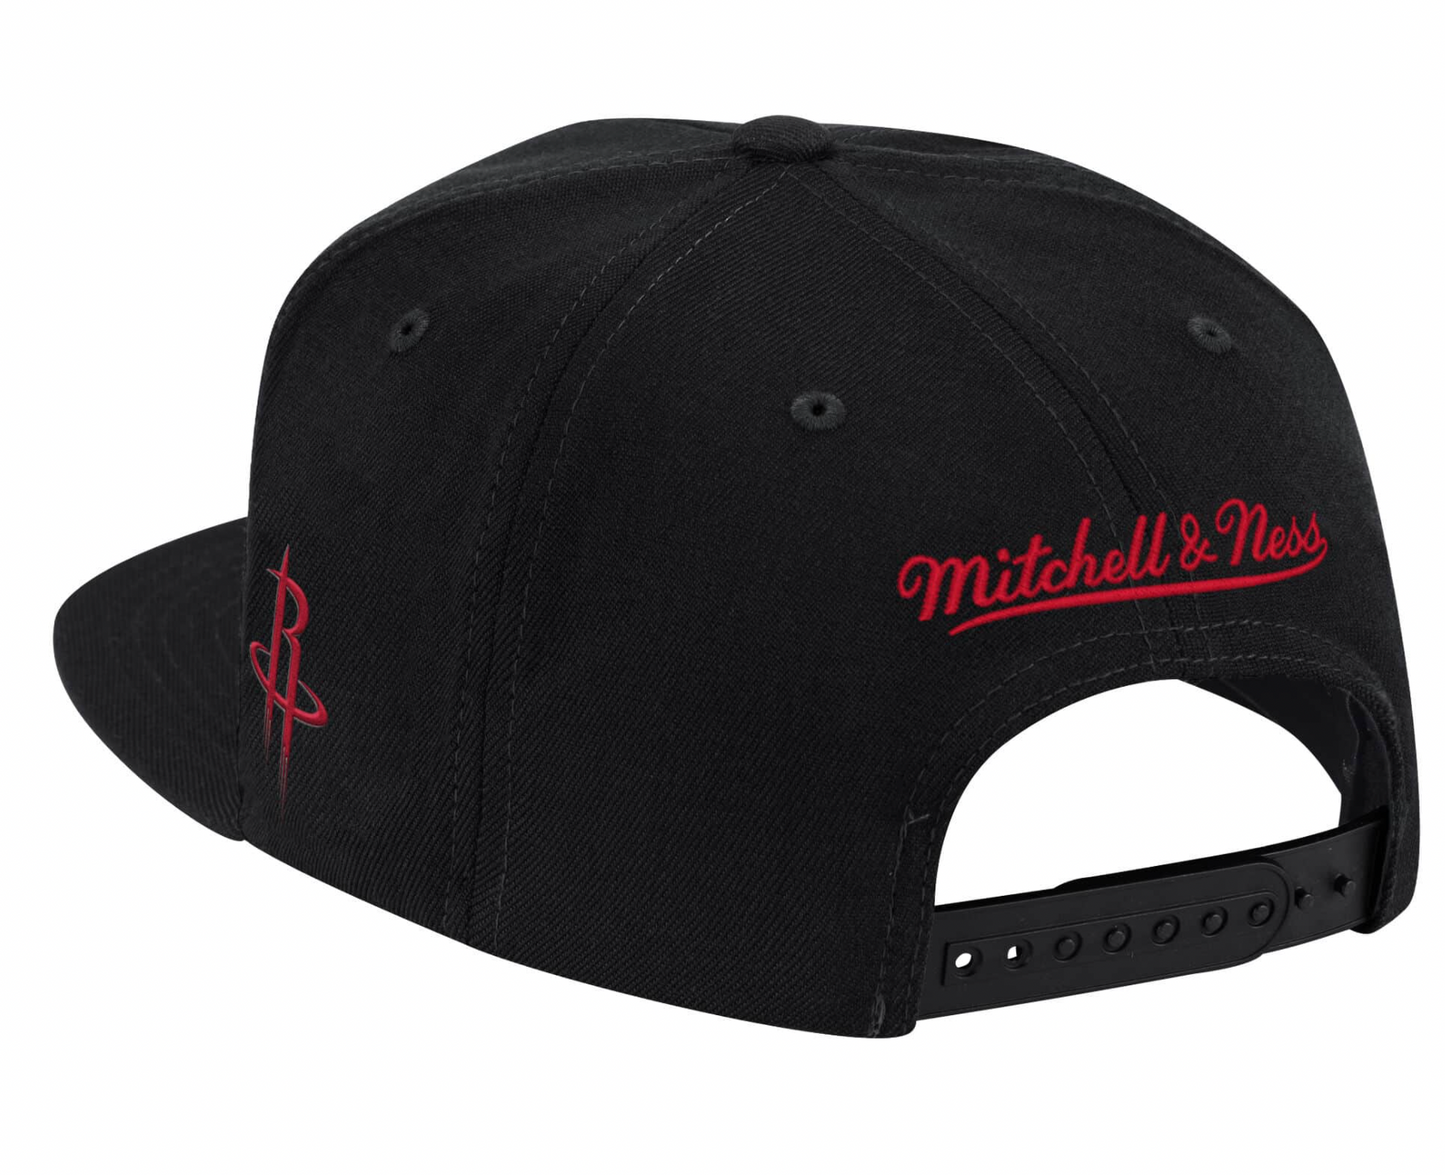 Men's Houston Rockets Black NBA Sports Specialty Snapback Adjustable Hat